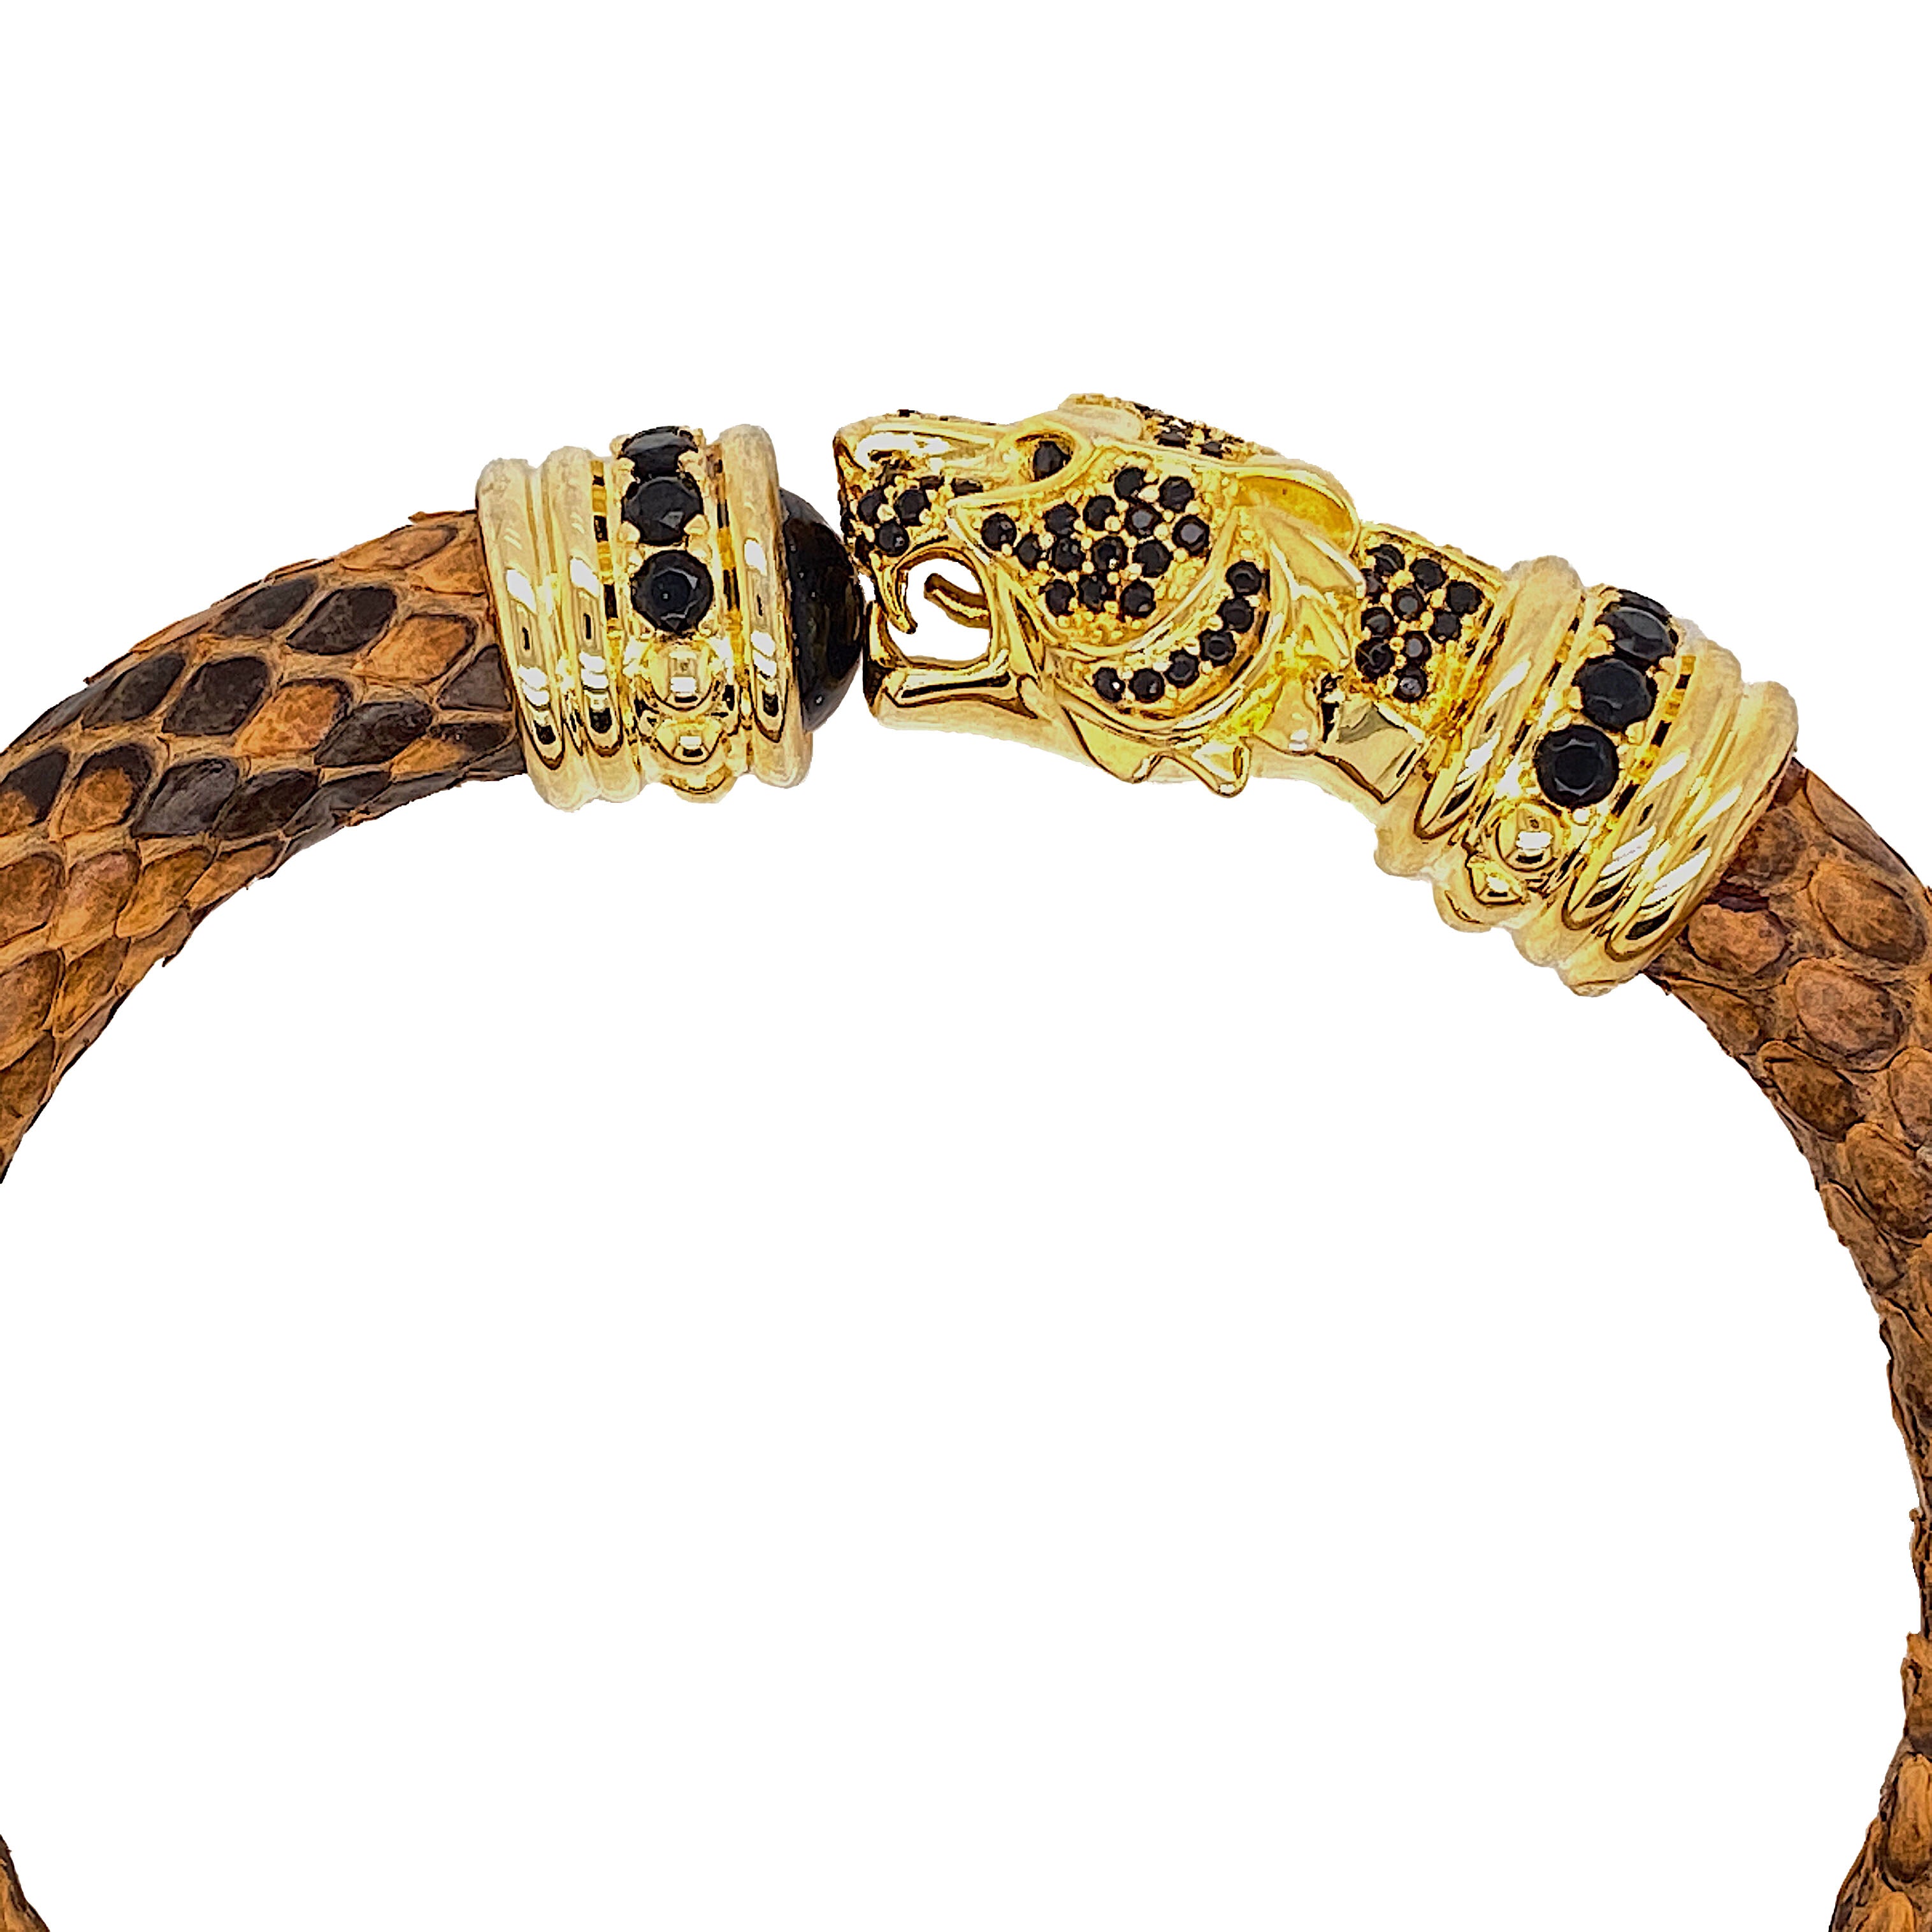 Brown Python Bracelet - Tiger Head